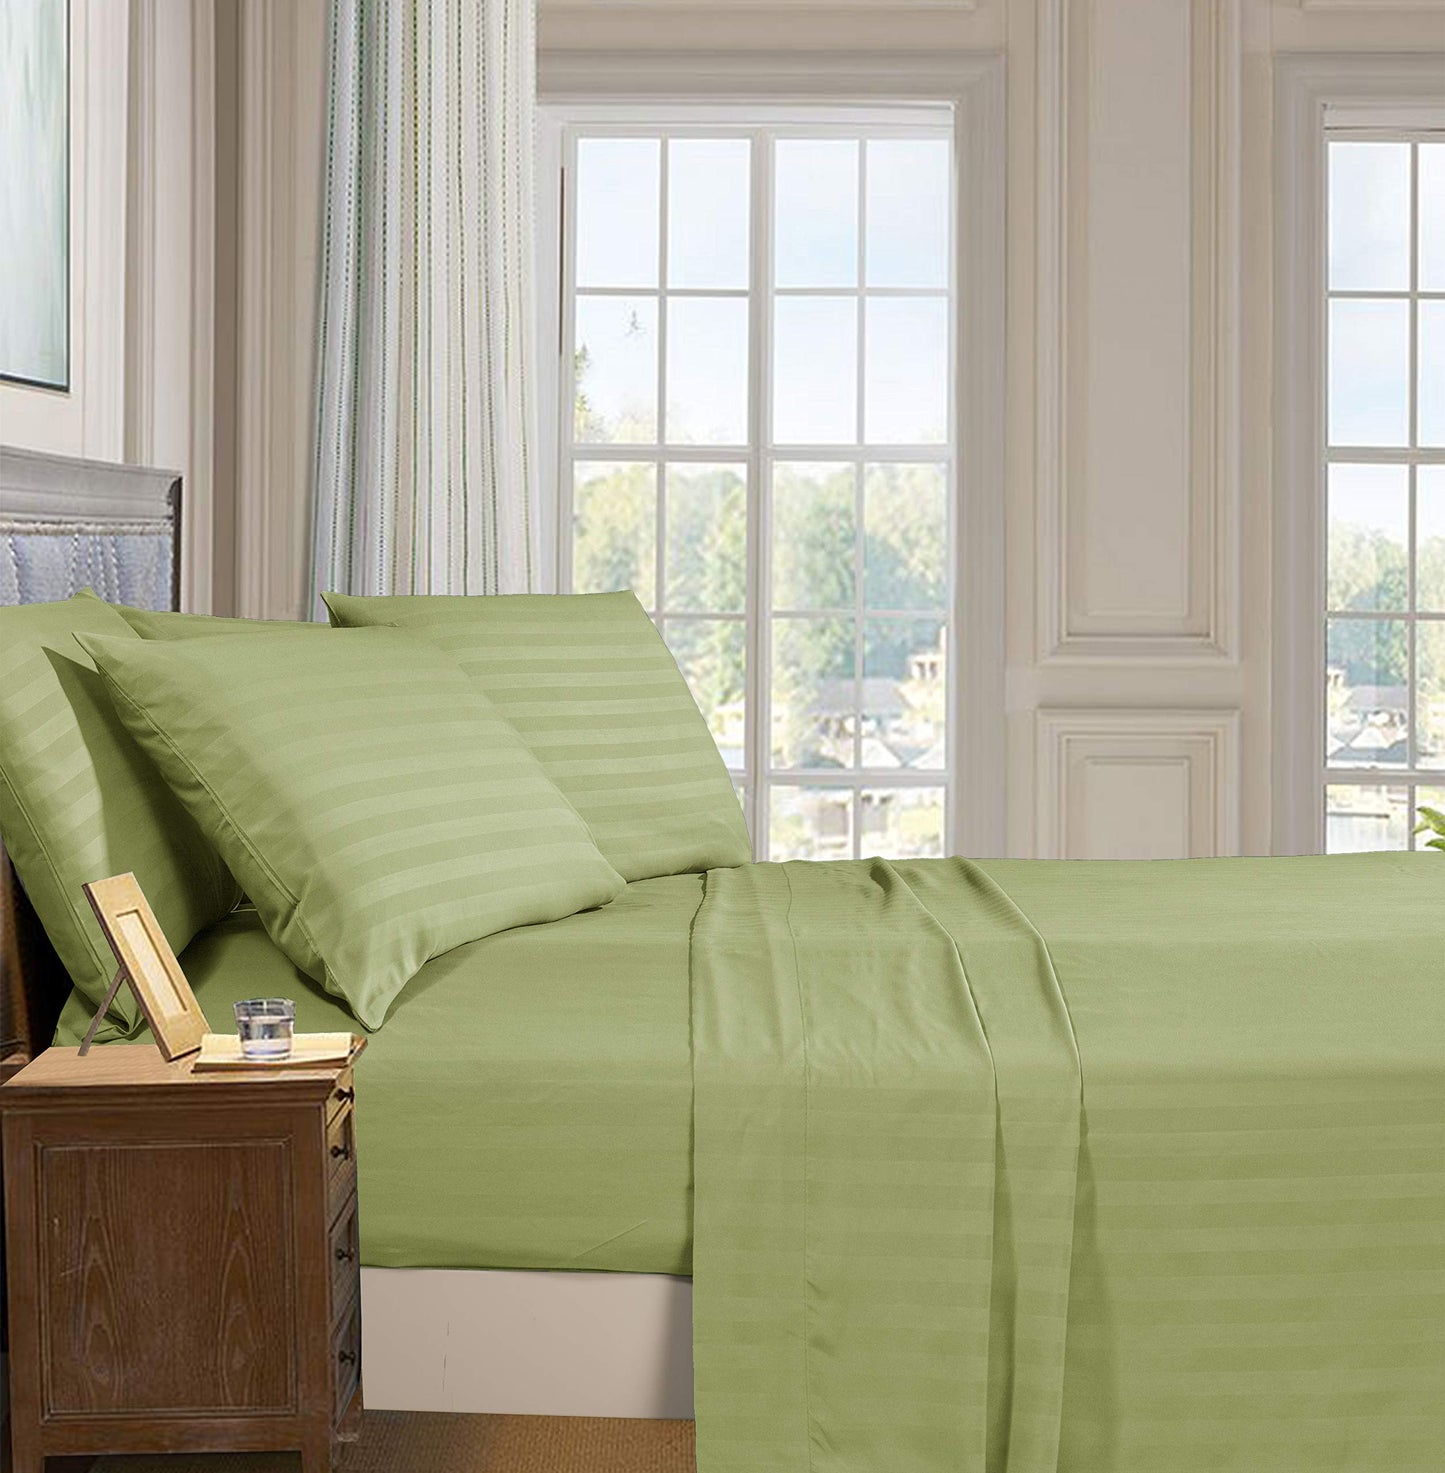 Elegant Comfort Best, Softest, Coziest 6-Piece Sheet Sets! - 1500 Premier Hotel Quality Luxurious Wrinkle Resistant 6-Piece Damask Stripe Bed Sheet Set, California King Sage/Green